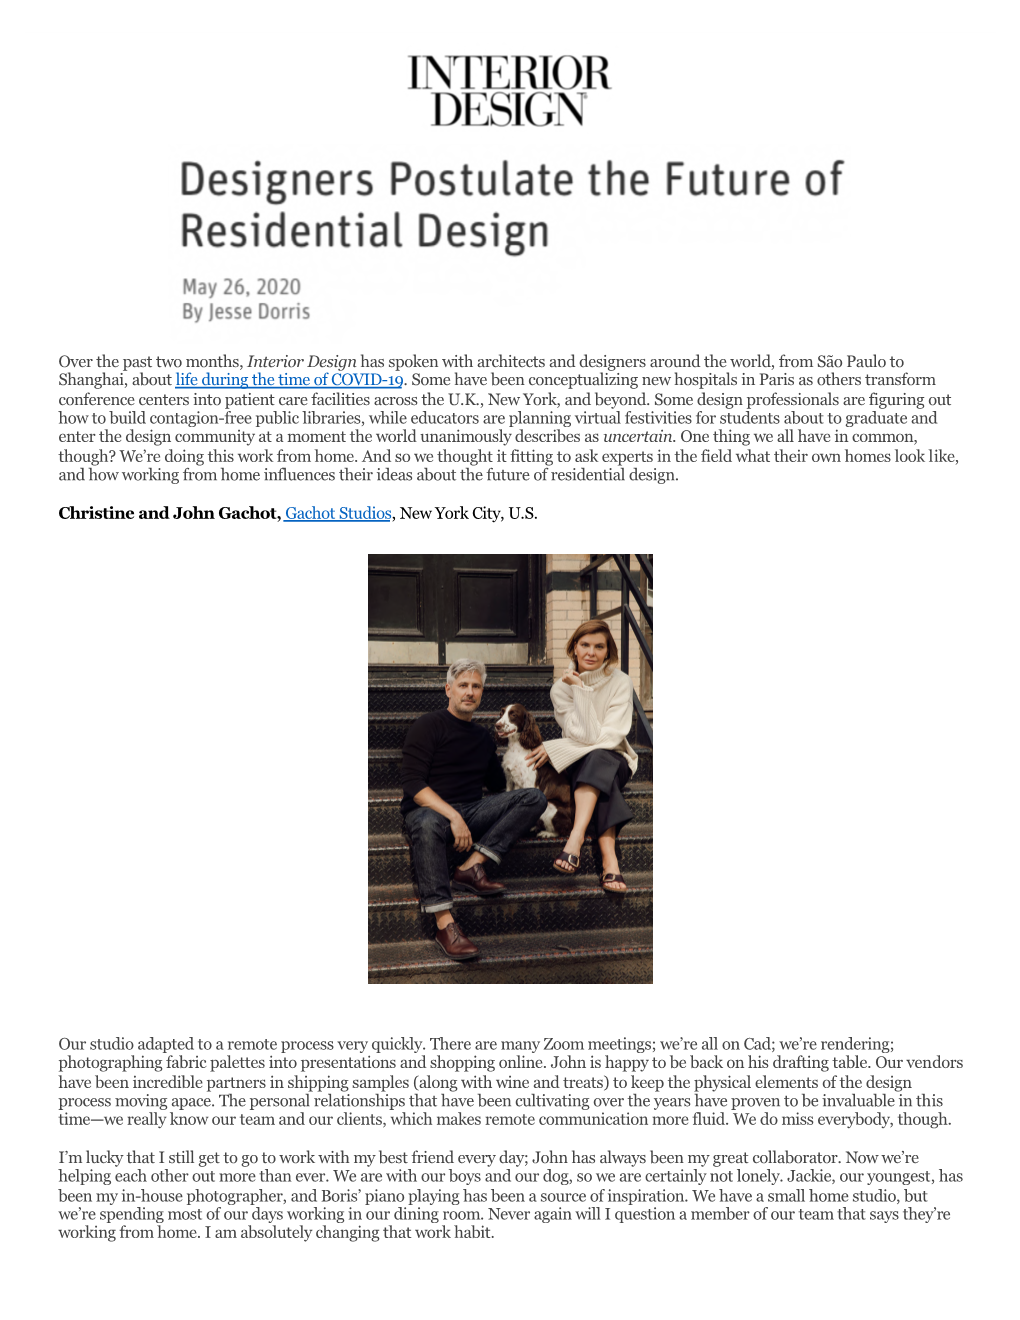 Designers Postulate the Future of Residential Design